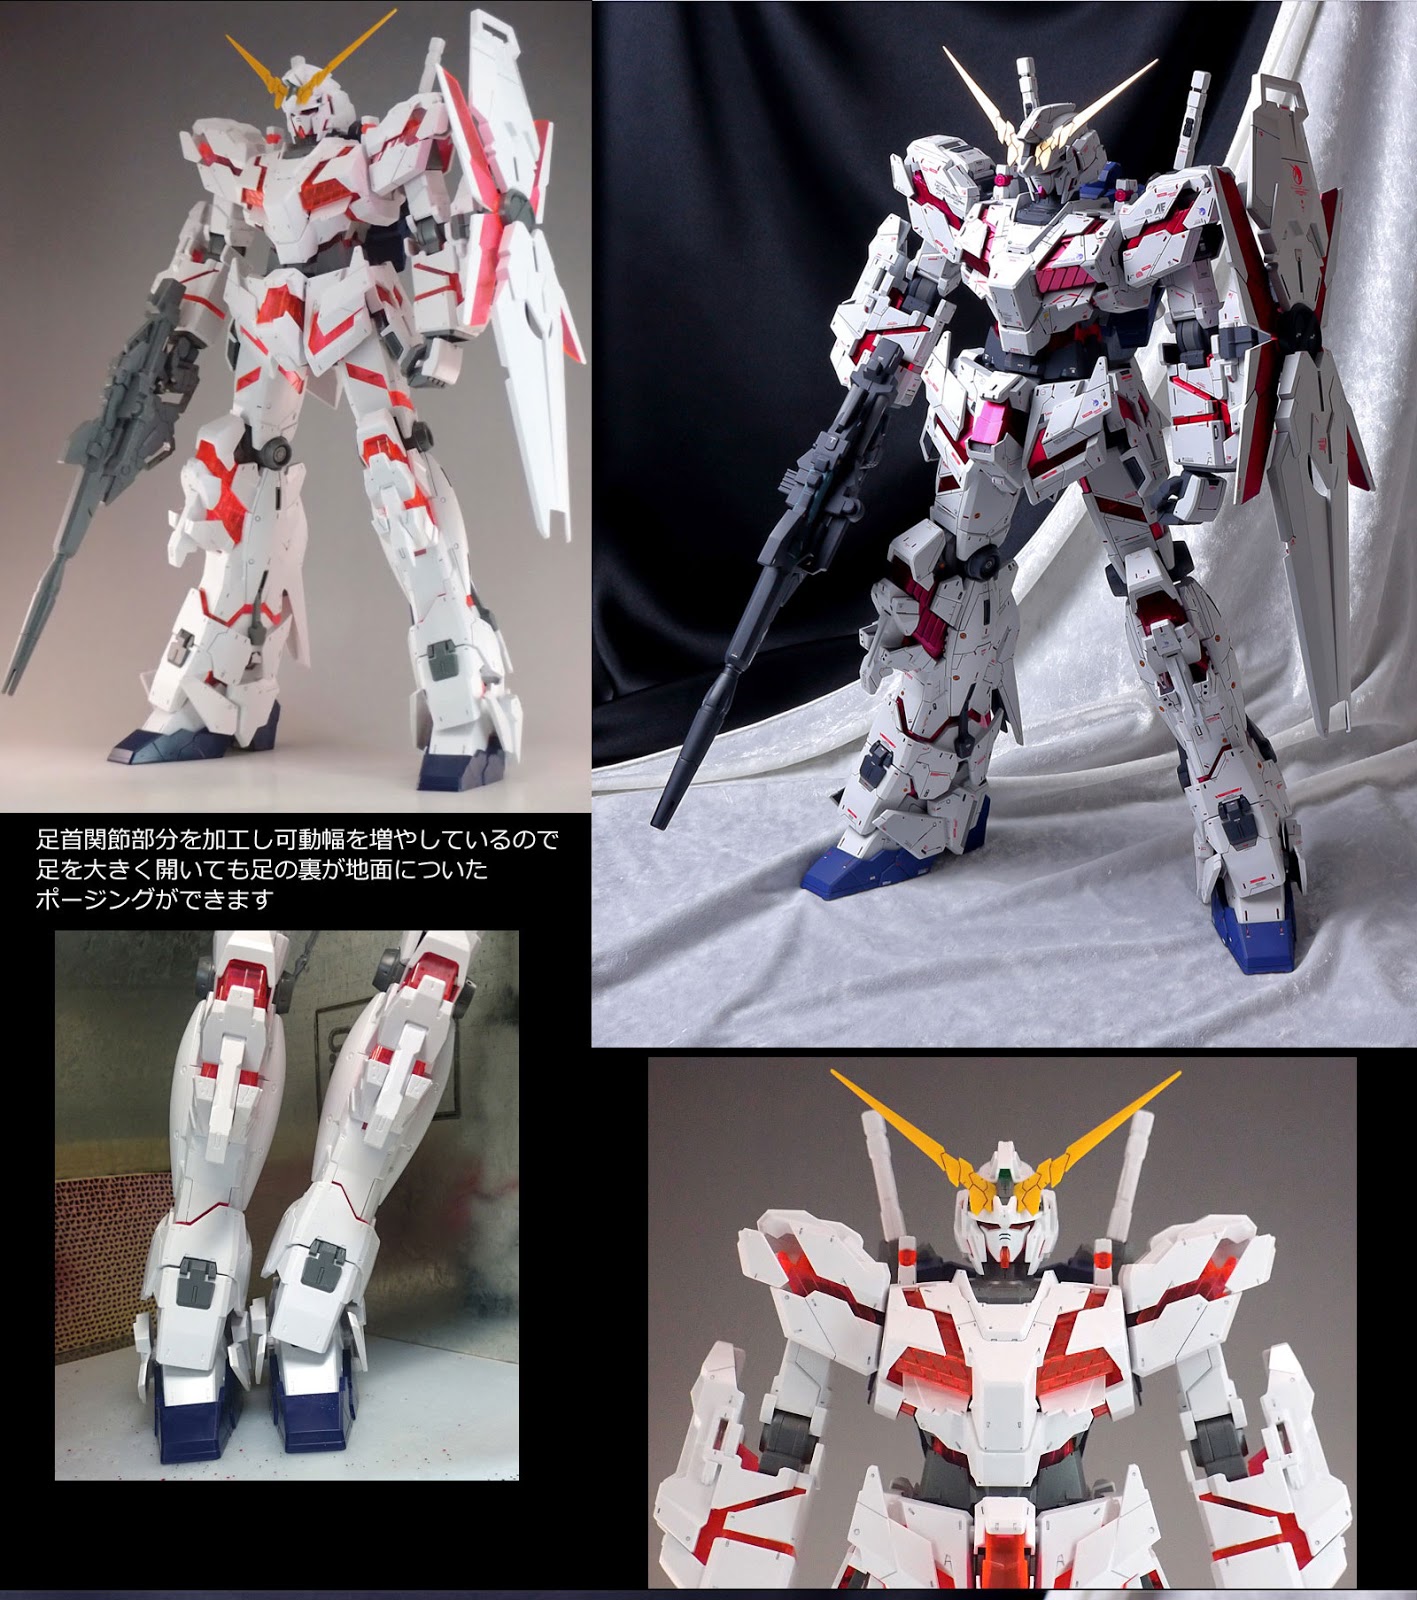 1/48 Mega Size Model Unicorn Gundam (Destroy Mode)